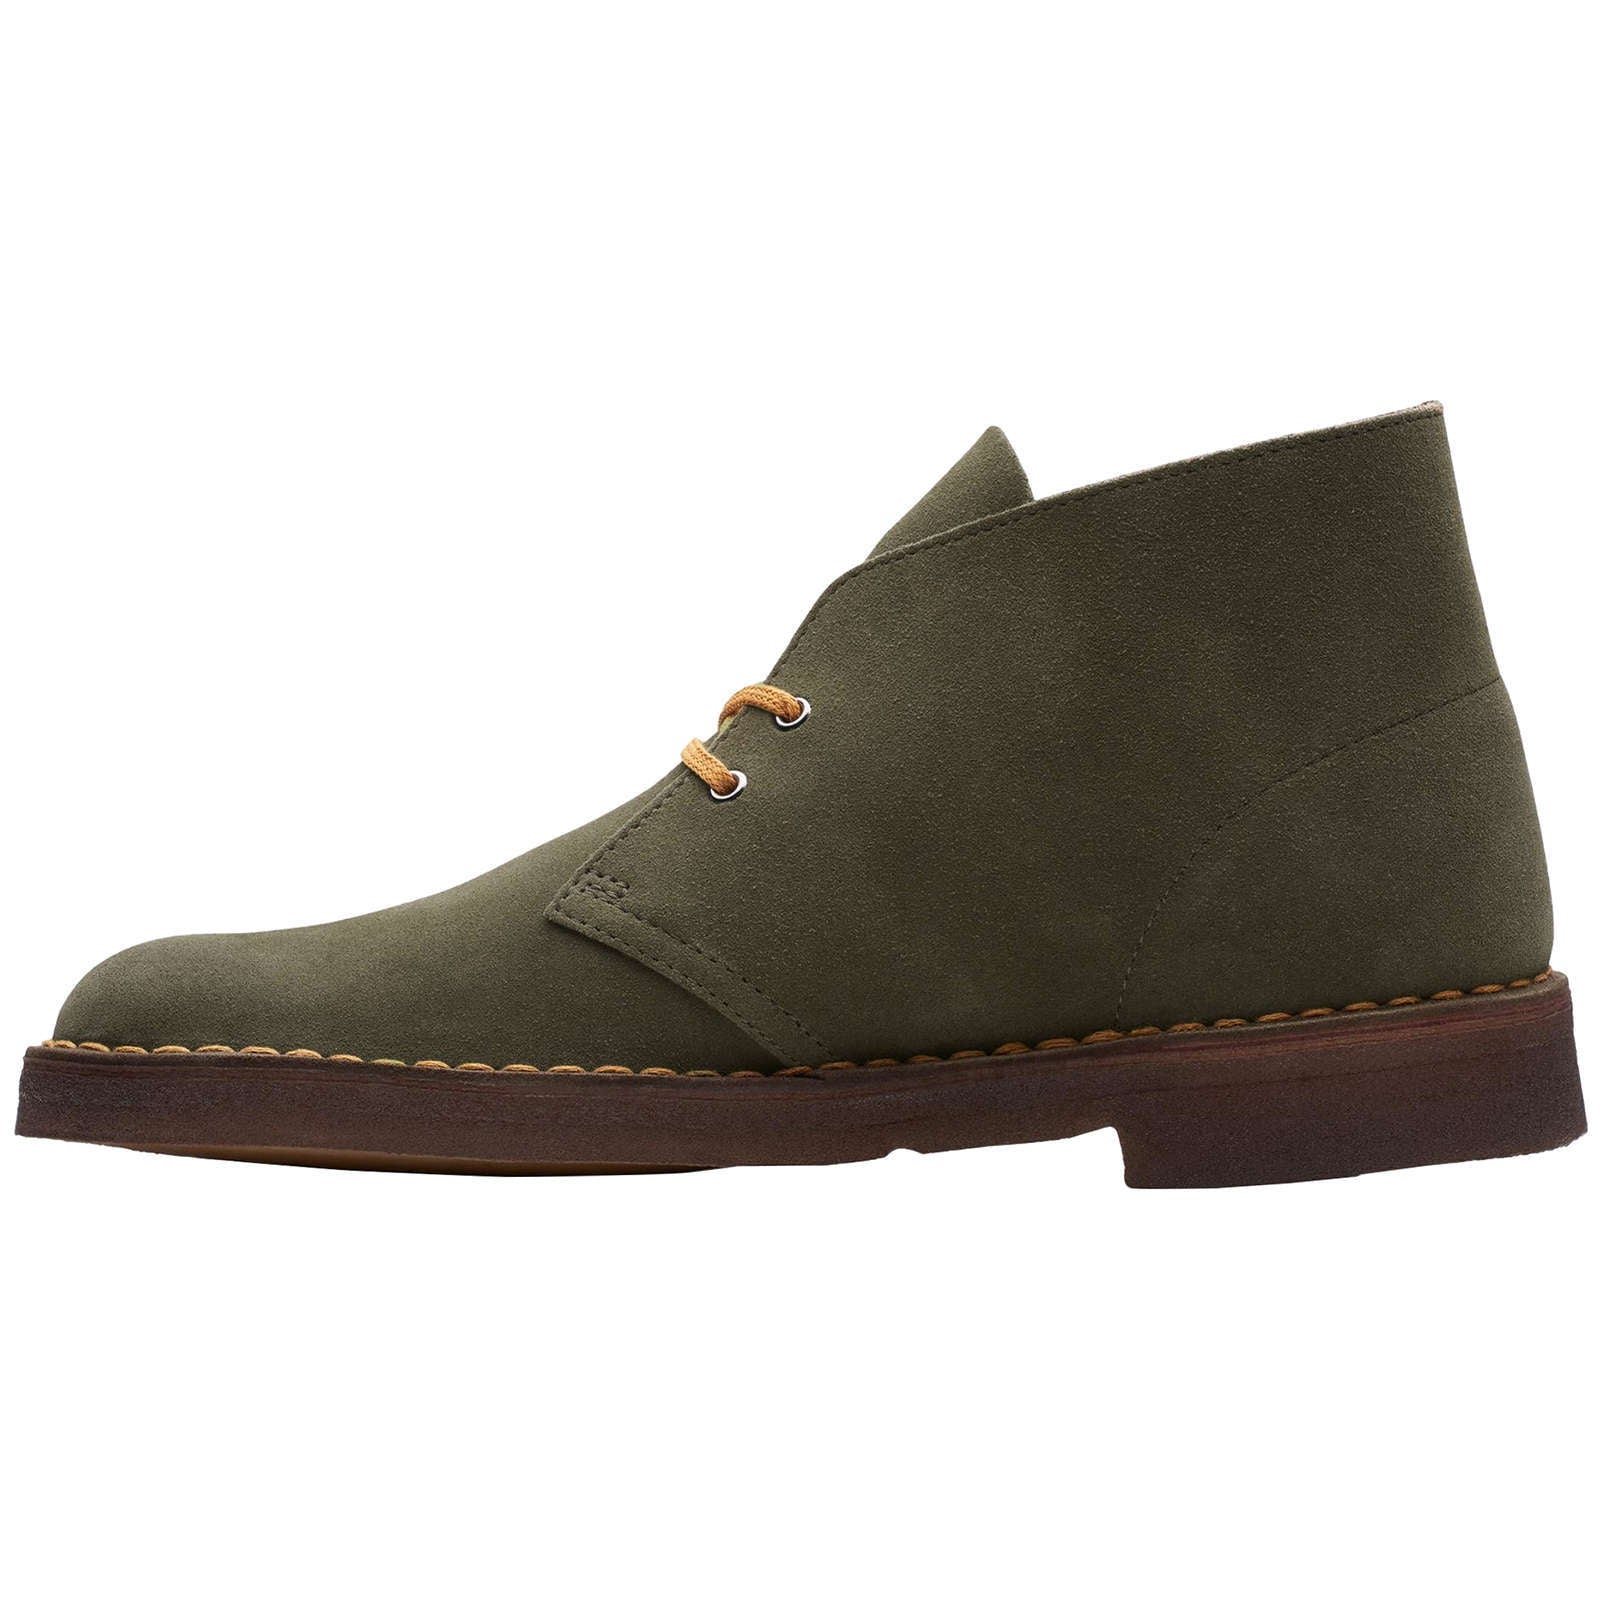 Clarks Originals Desert Boot Suede Leather Men's Boots#color_tobacco